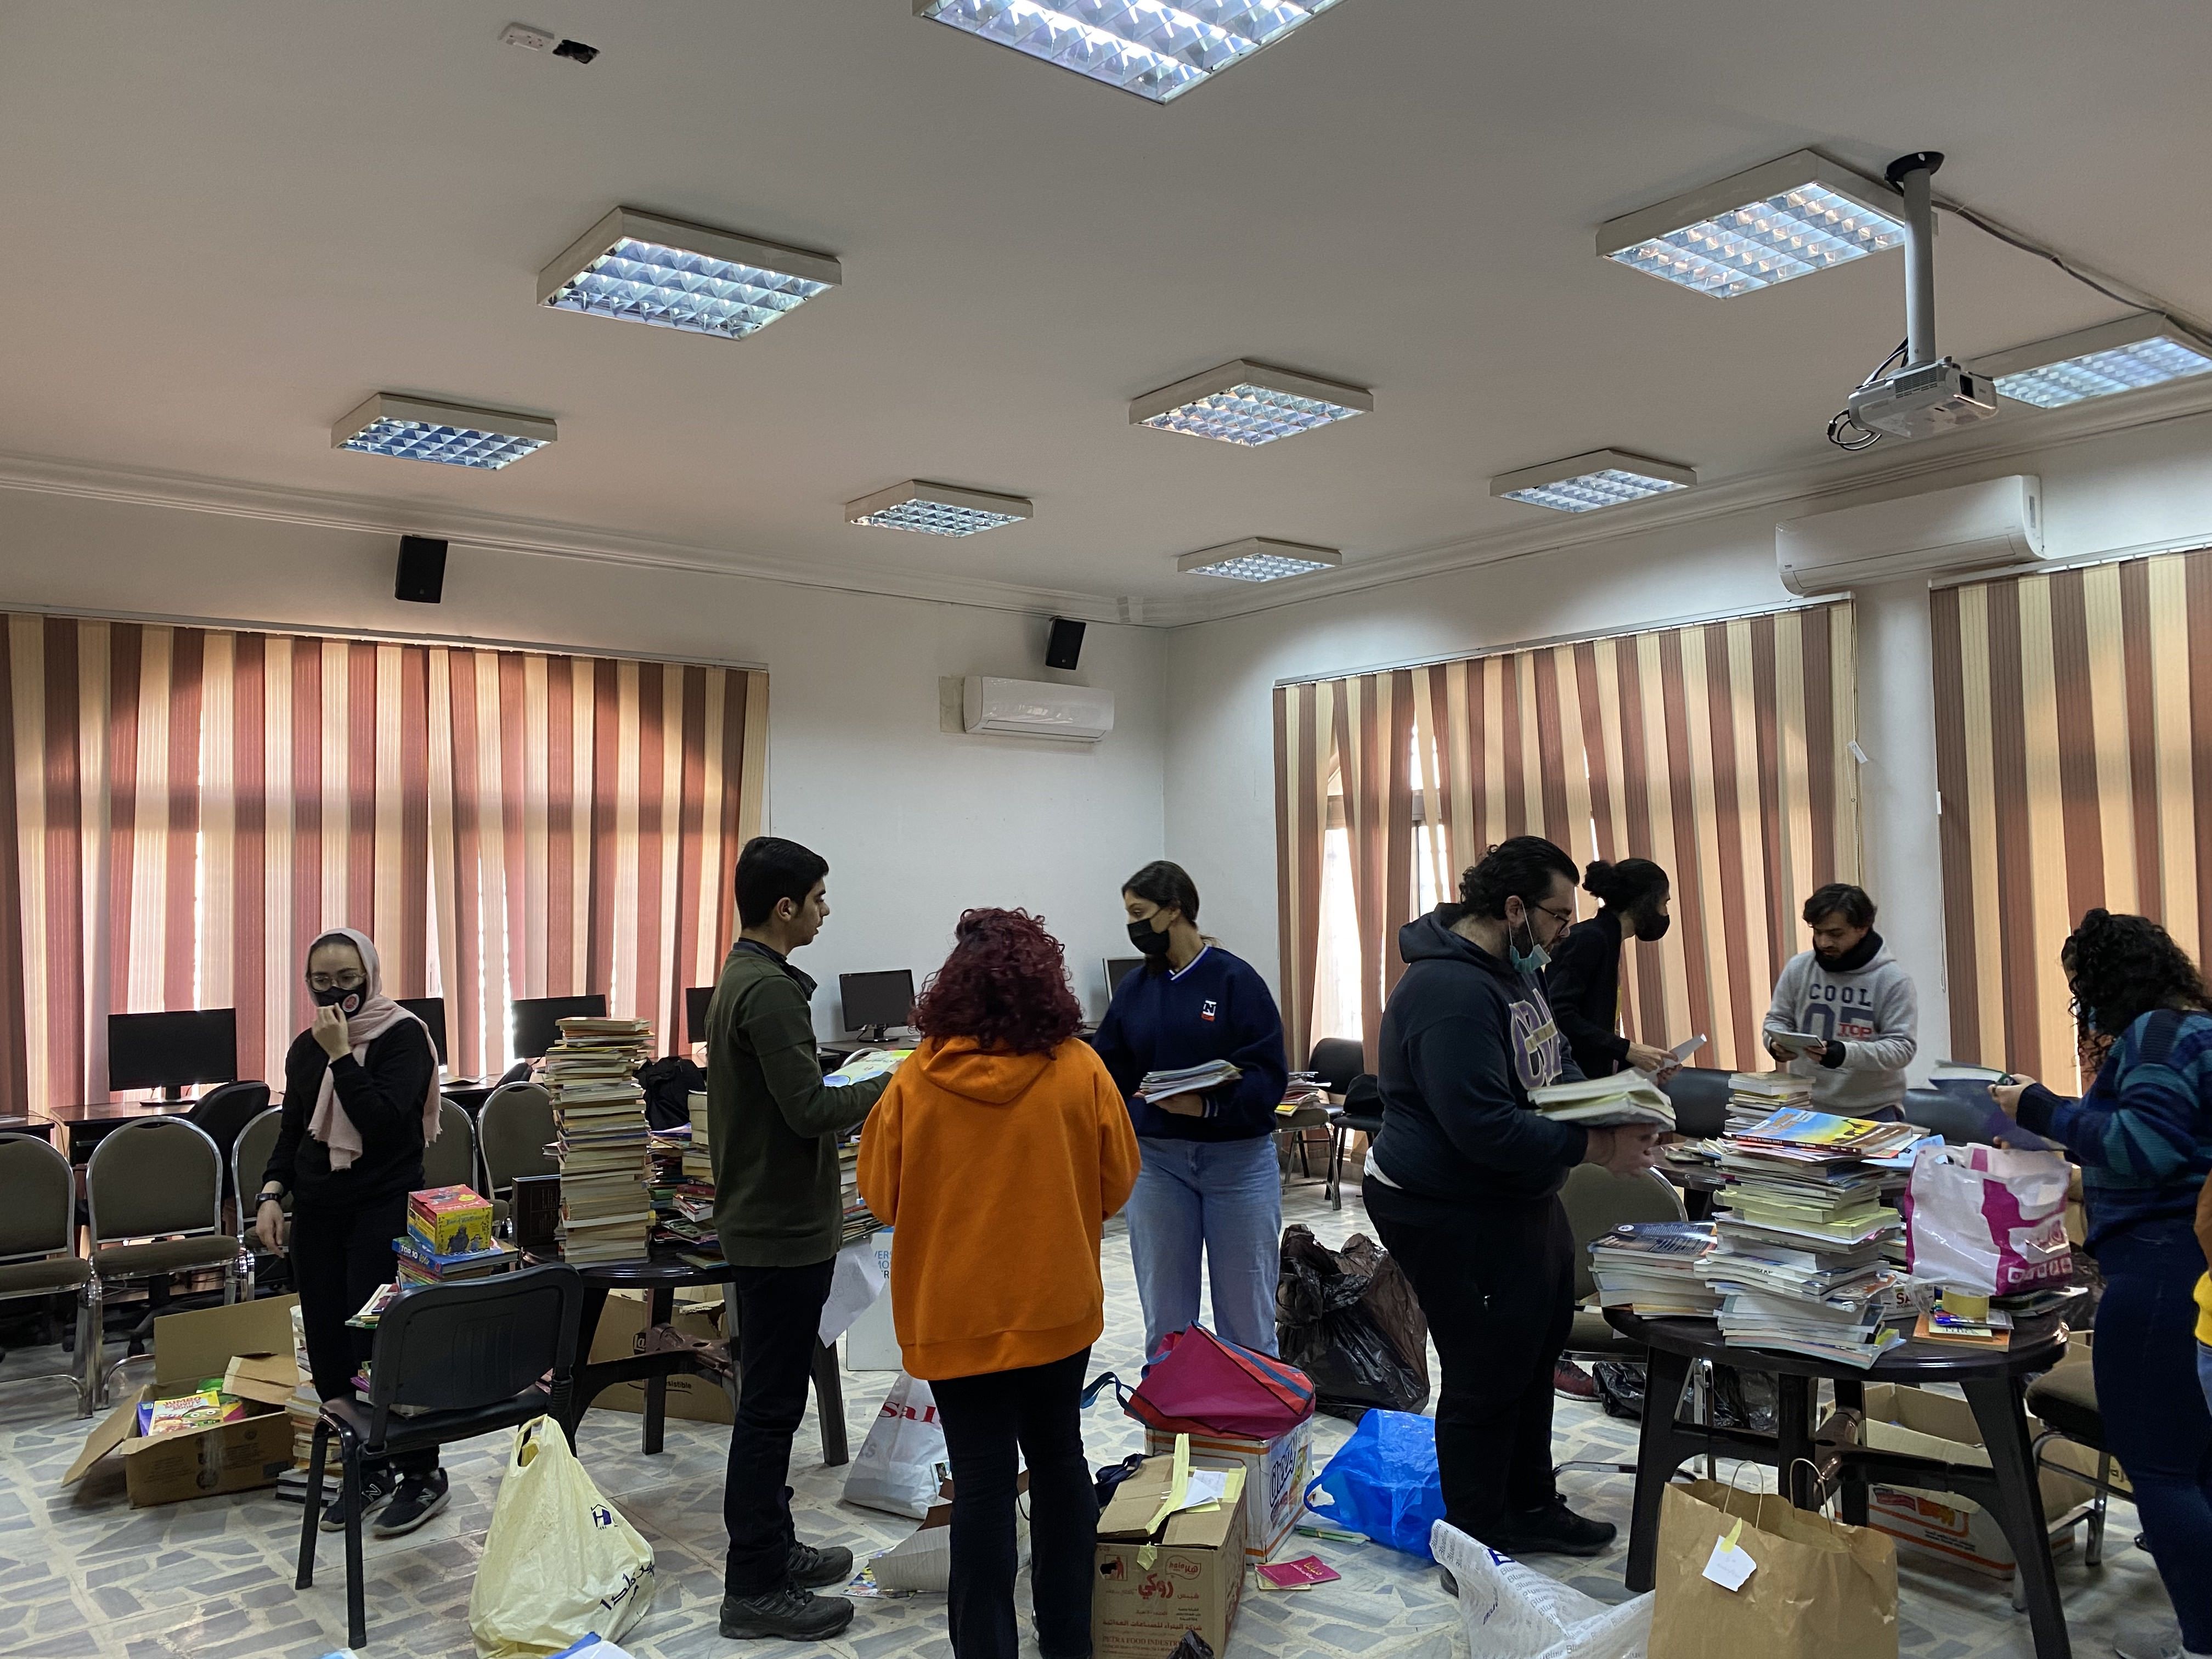 Jordanian YES alumni sorting books in a classroom